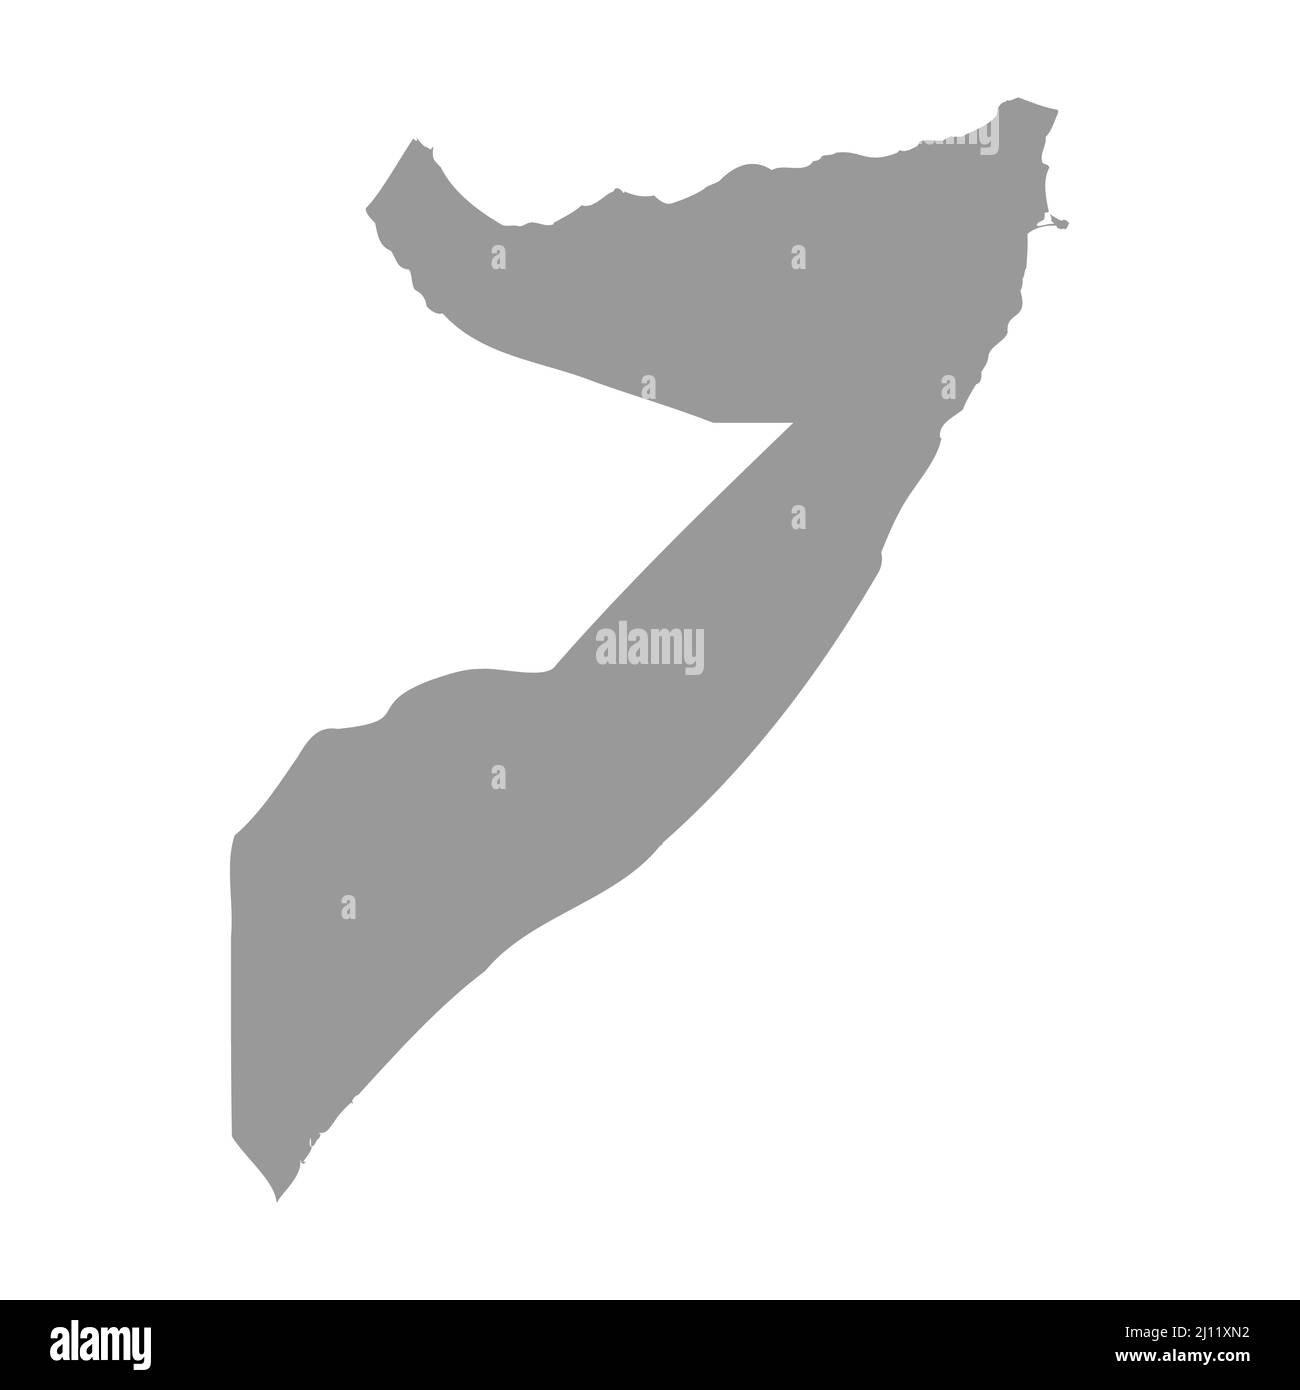 Somalia vector country map silhouette Stock Vector